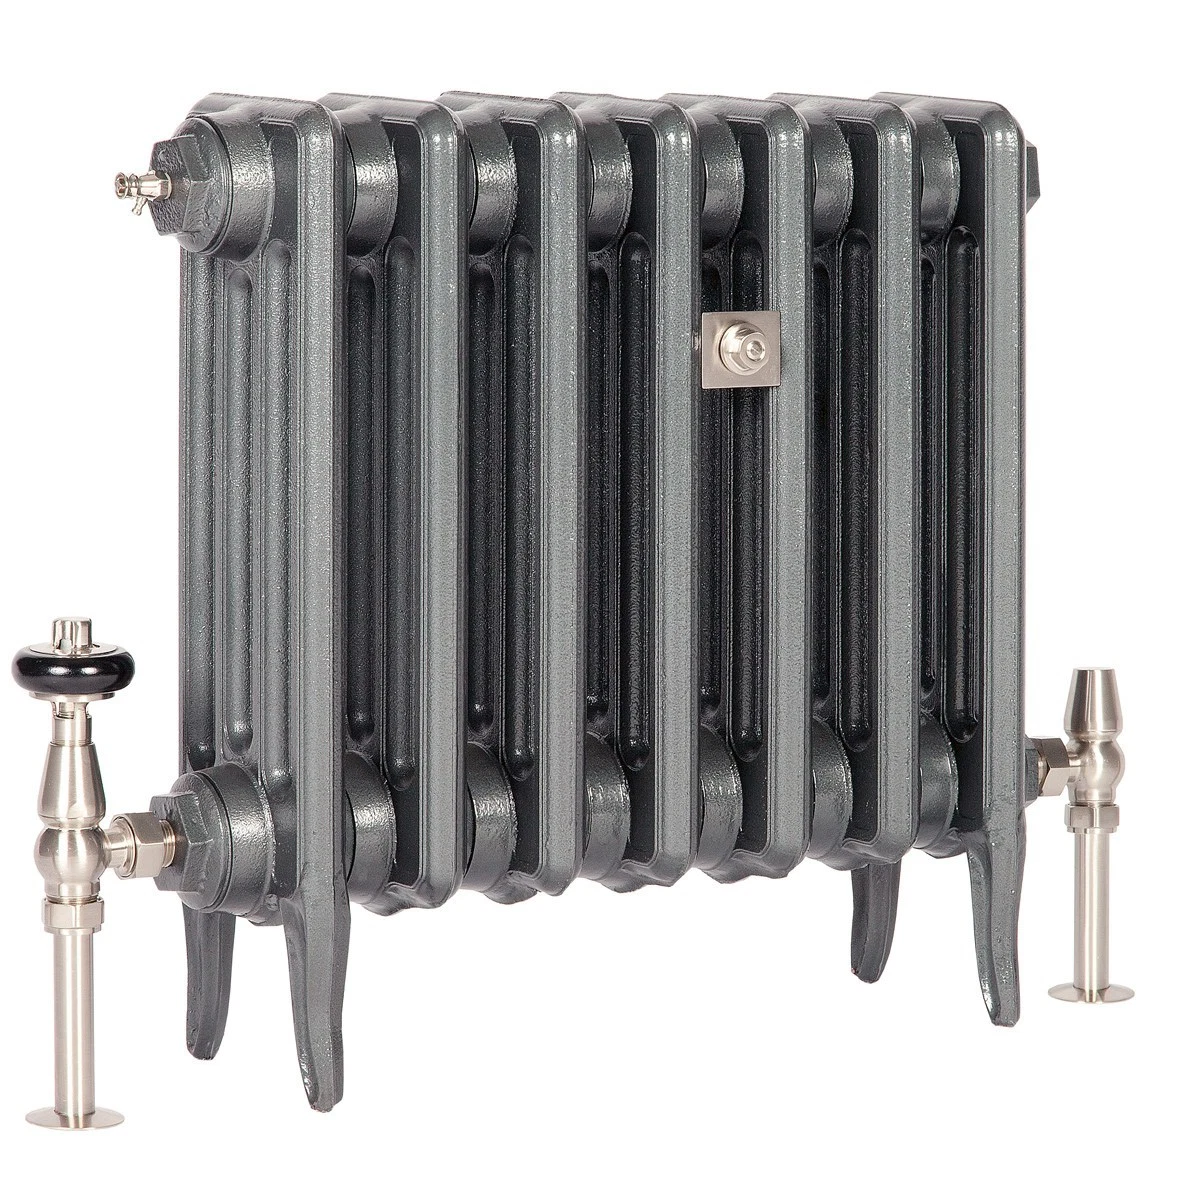 Various of Size Central Heating Designer Radiator